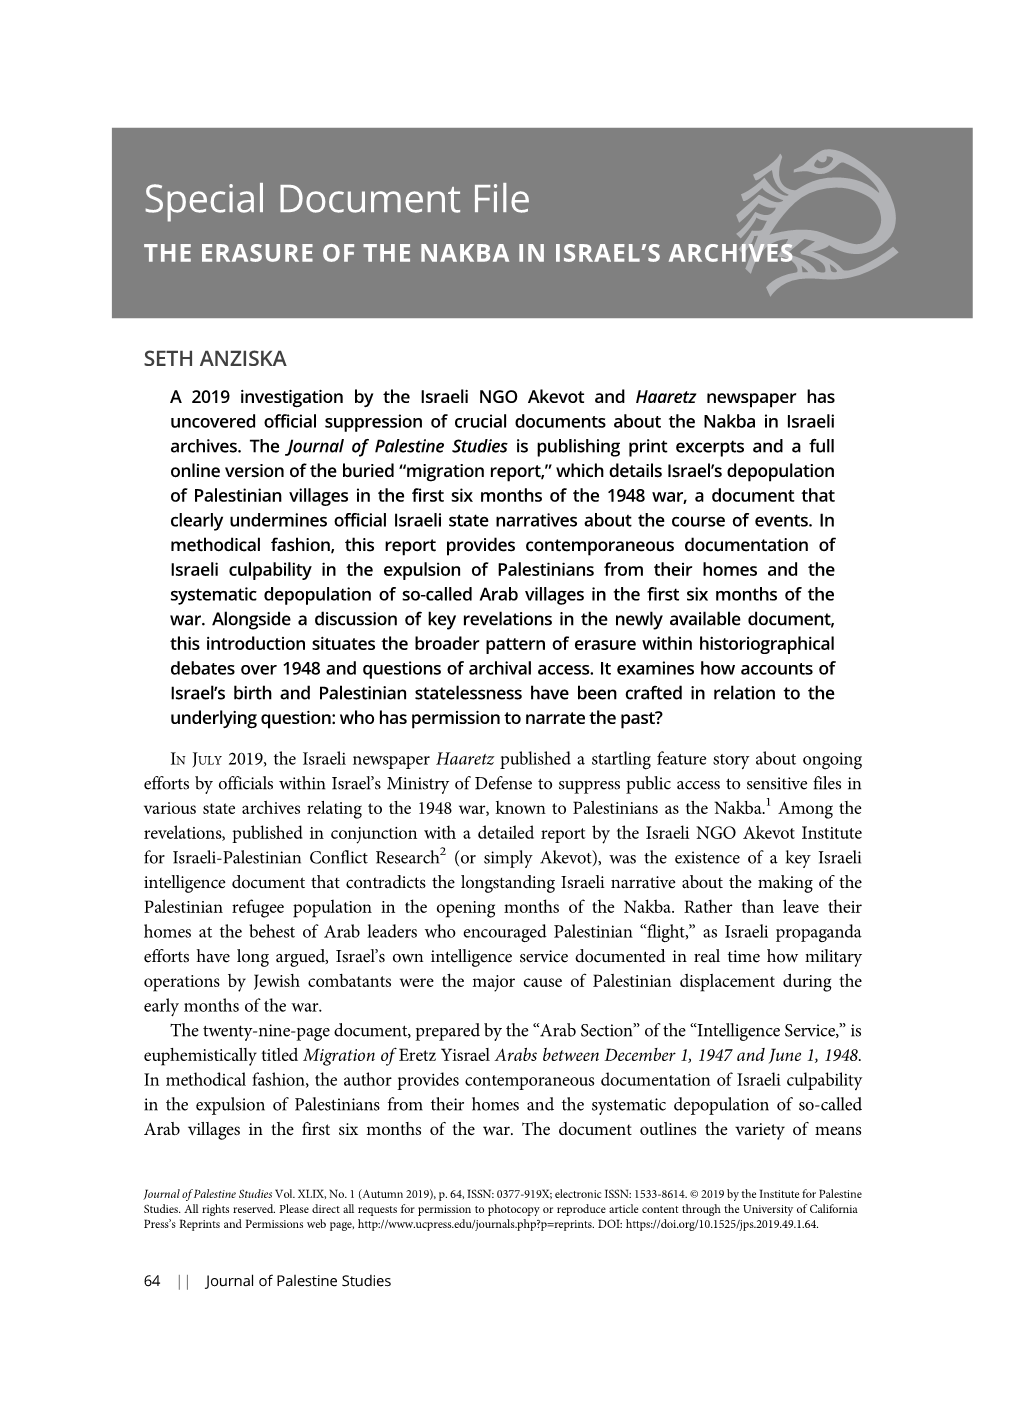 The Erasure of the Nakba in Israel's Archives